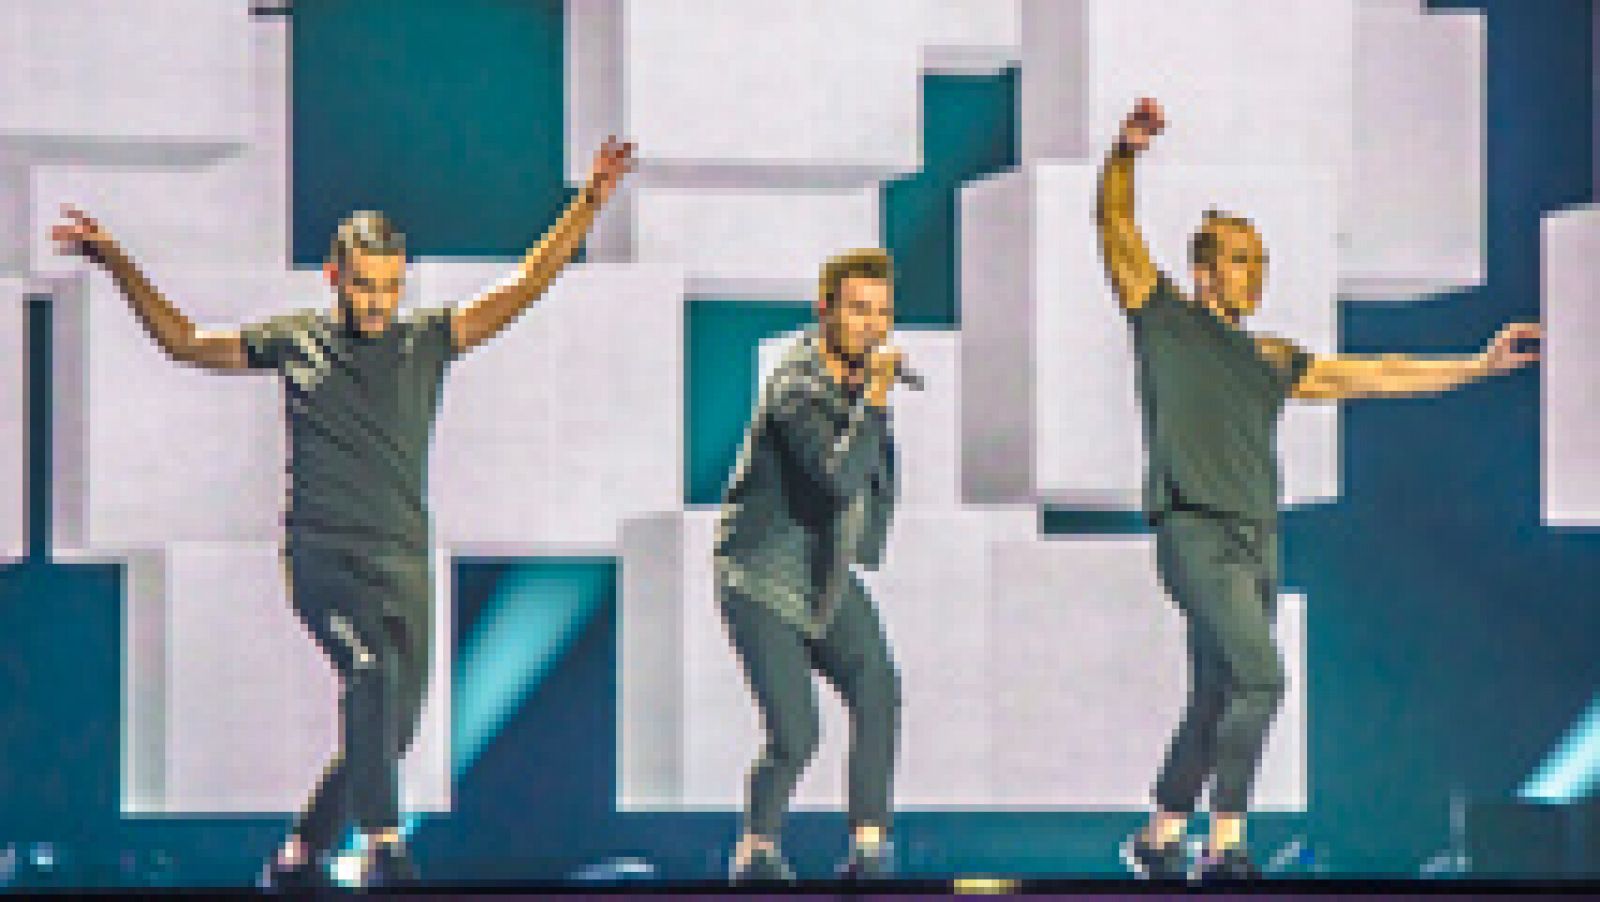 Eurovisión 2017 - Chipre: Hovig canta "Gravity"